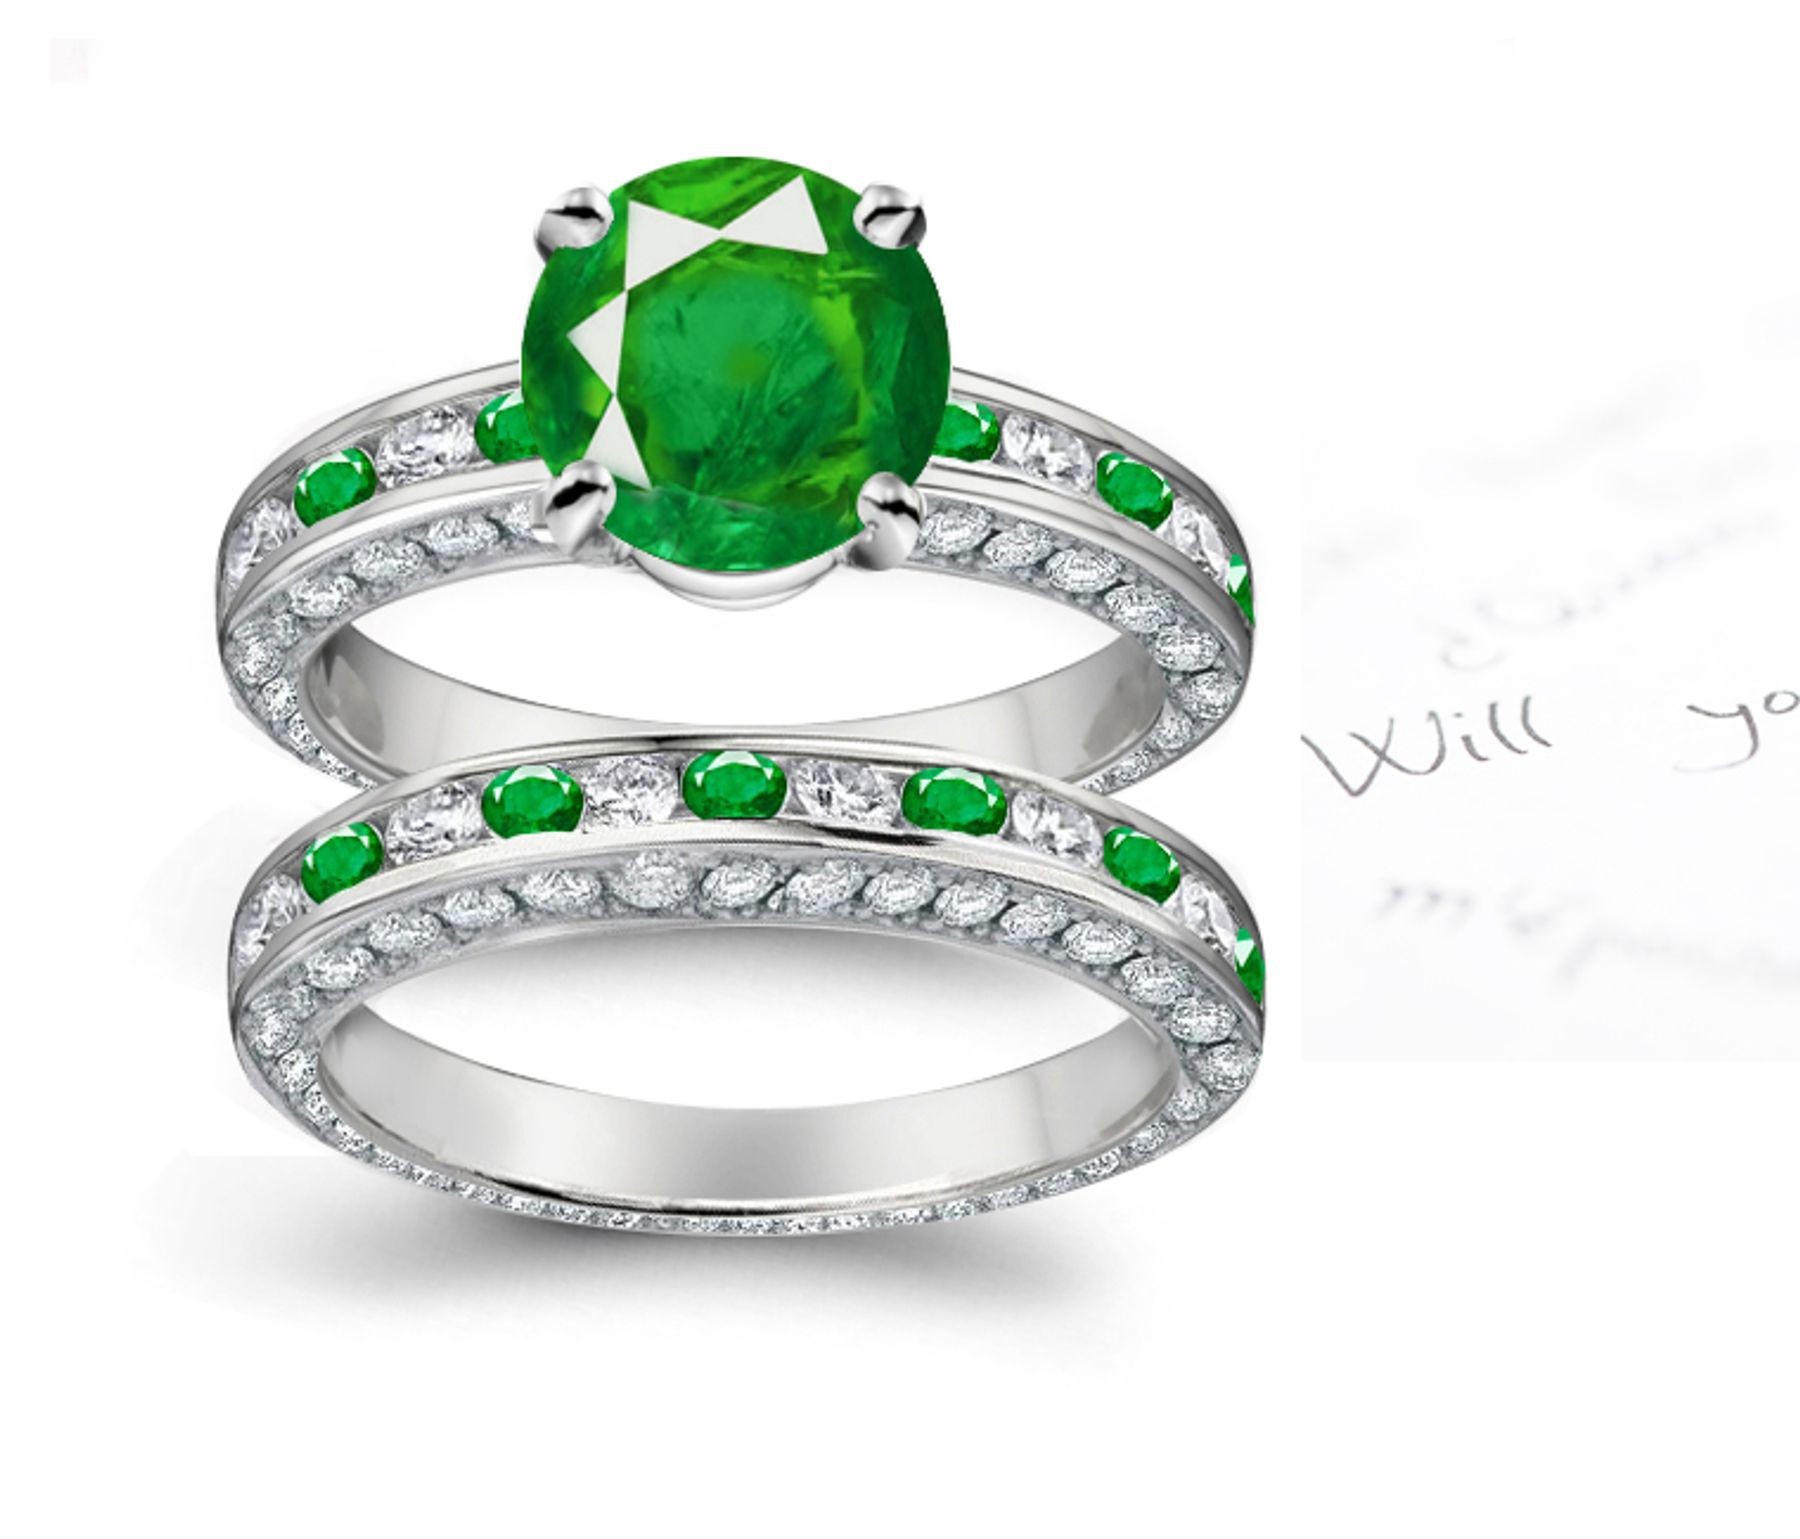 Design Variations: Modern Update on Classic Channel Set Spring Green Emerald Diamond Ring in 14k White Gold & Platinum